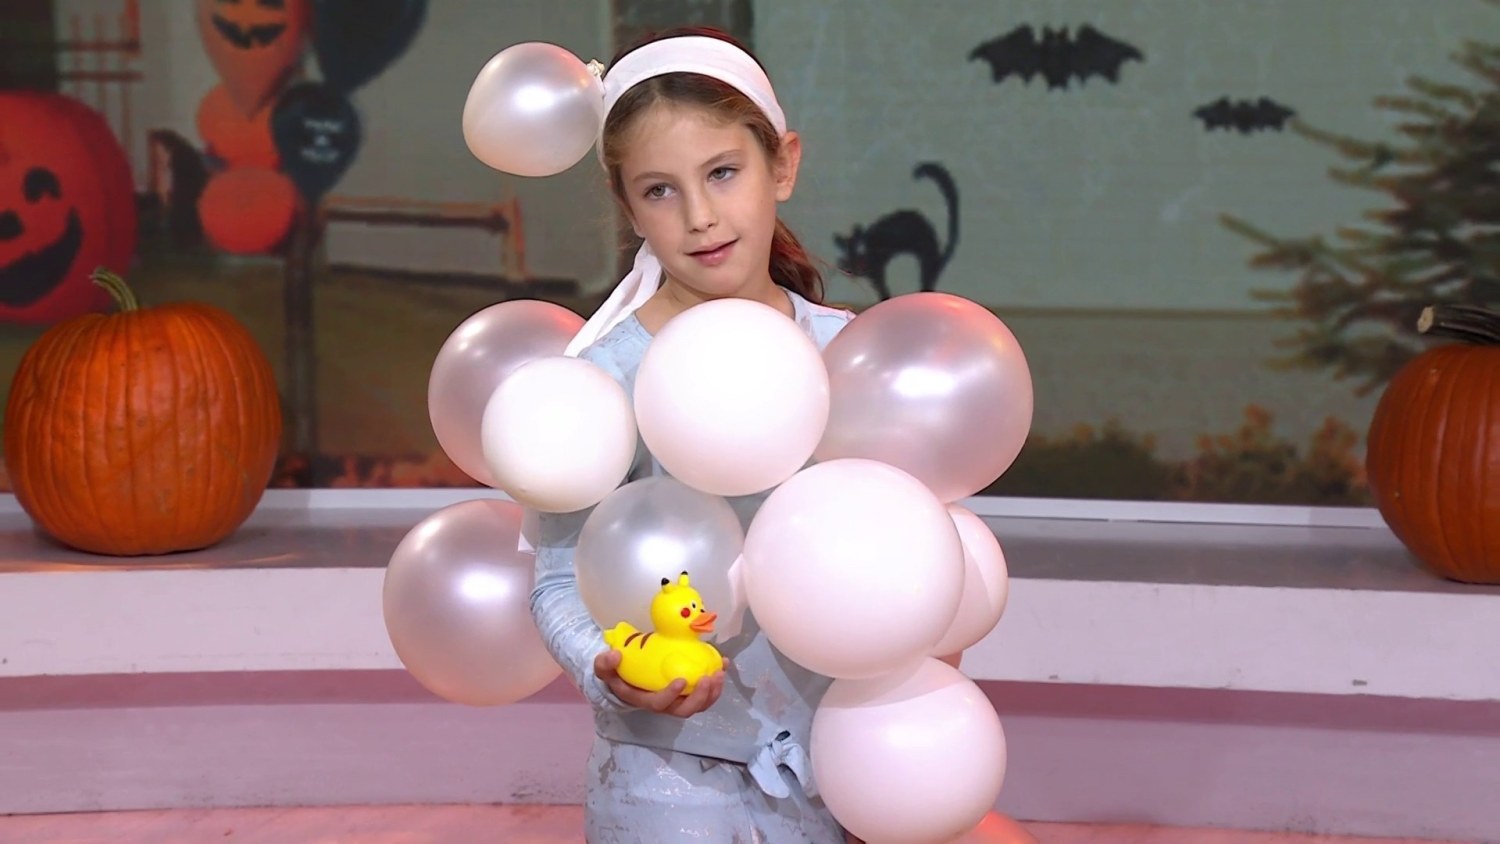 Homemade Bubble Bath Costume for Kids